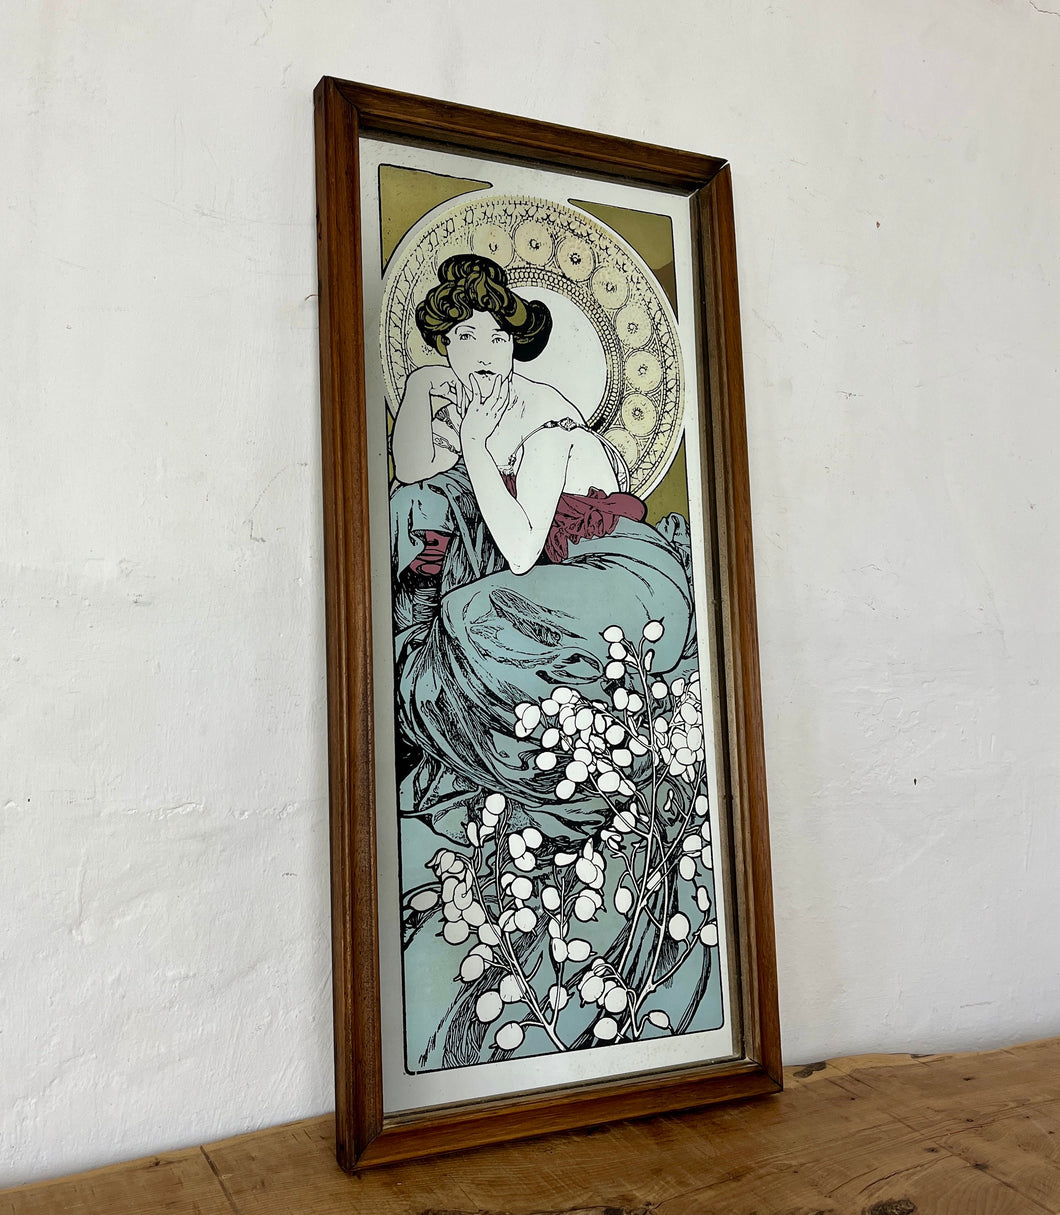 Alphonse Mucha - Topaz, artist mirror, art nouveau, lithograph picture, vintage style, beautiful sign, interior design, home accents